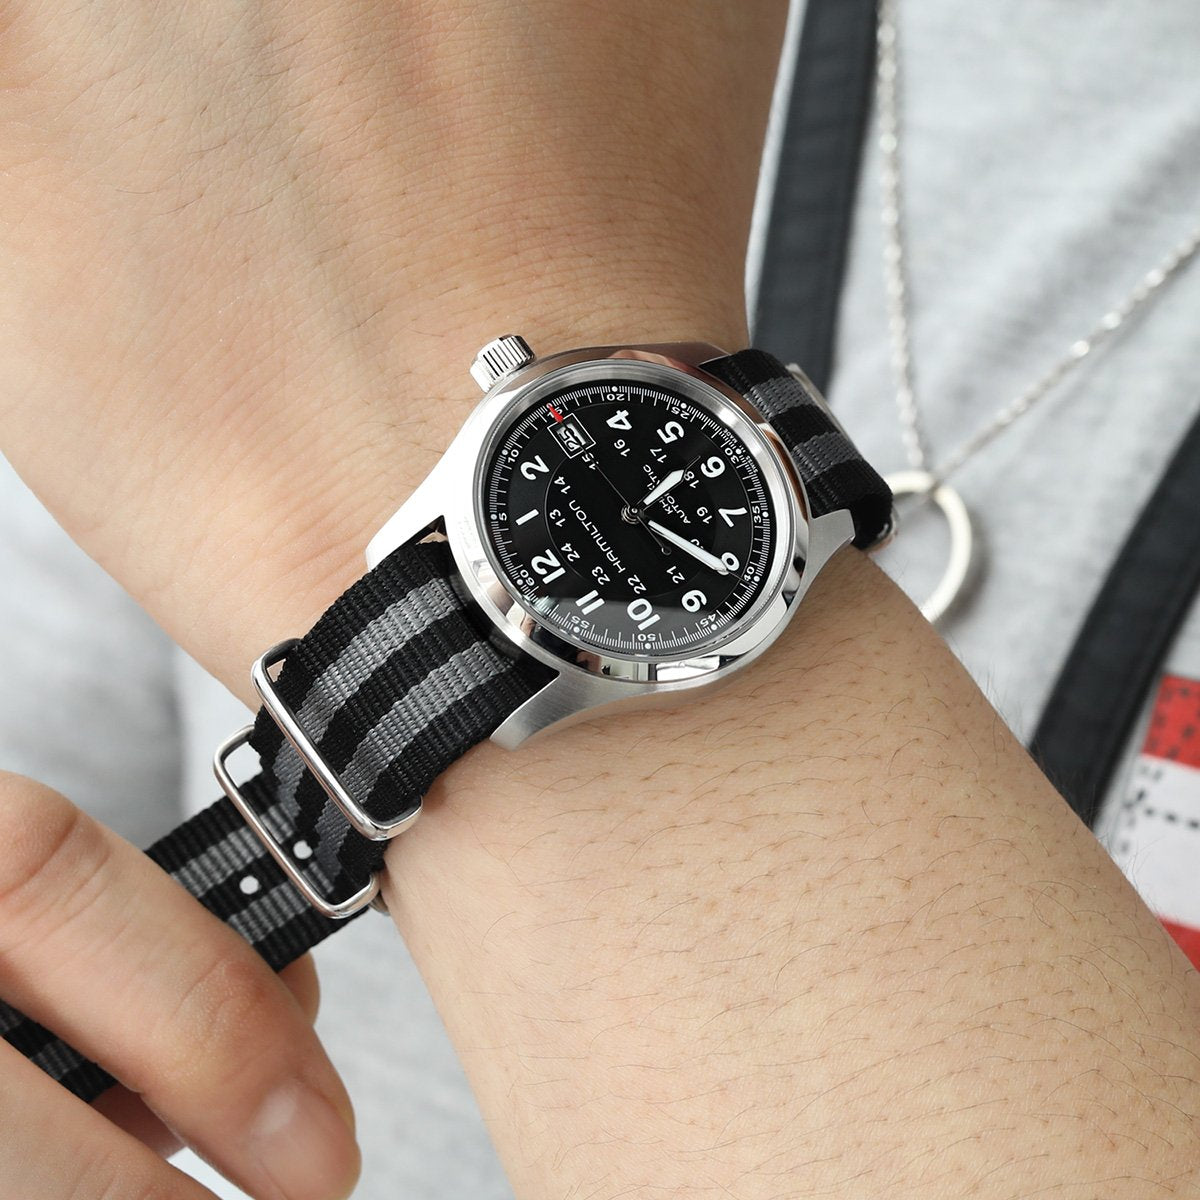 Bond' mesh watch bracelet - Stainless steel BOND type Milanese watch strap